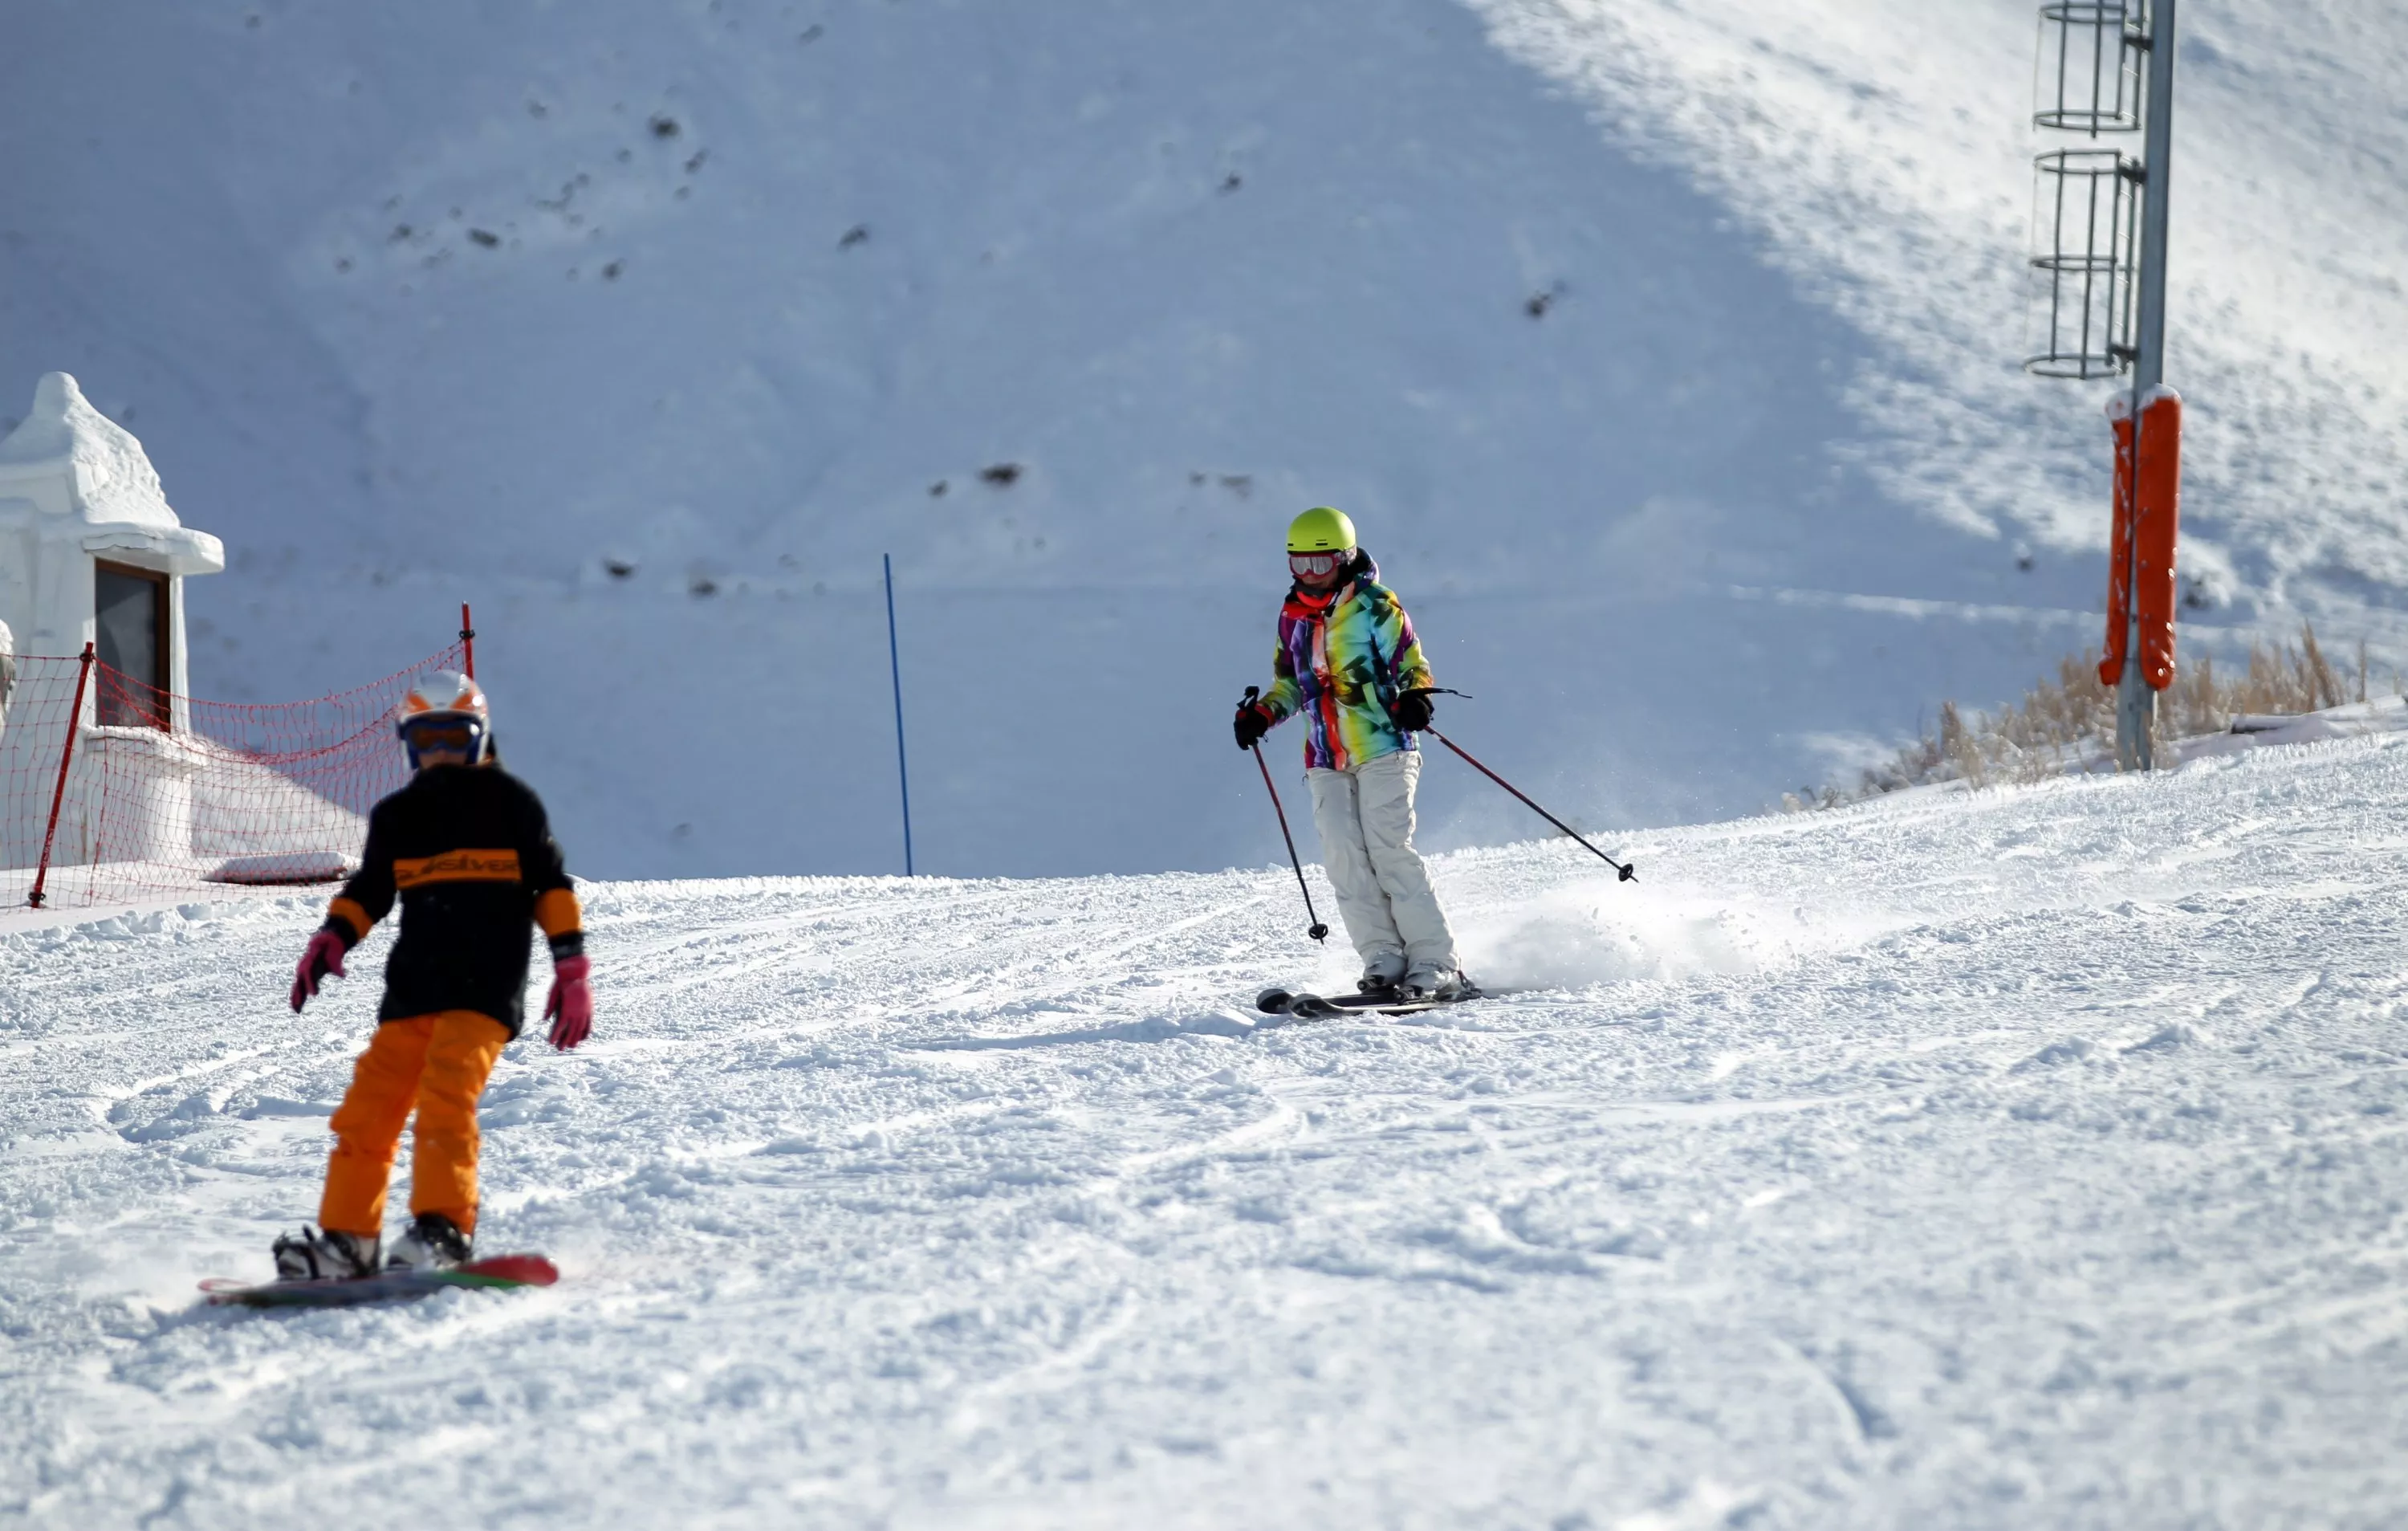 Palandoken Ski Center in Turkey, Central Asia | Snowboarding,Skiing - Rated 4